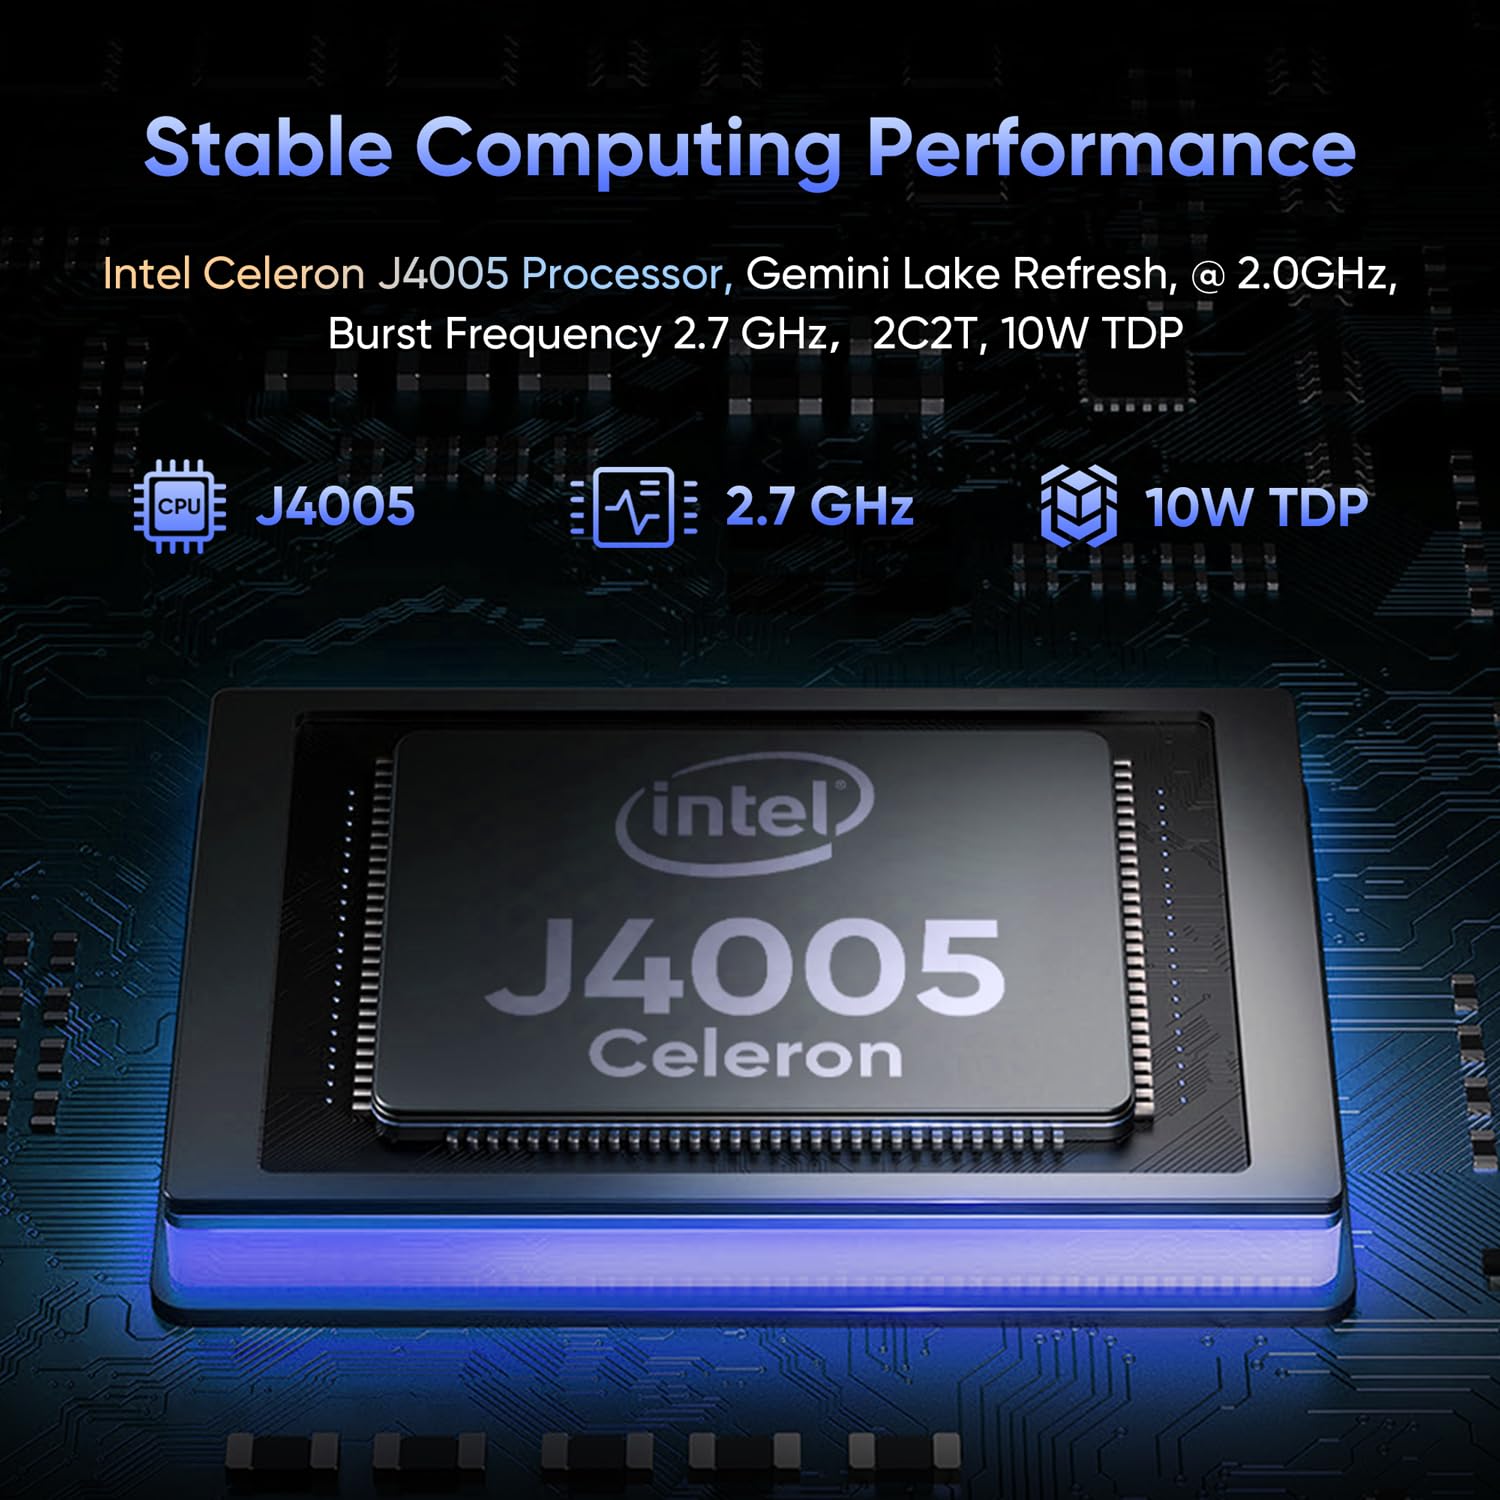 ZENAERO 14.1" Windows 11 Pro Laptop PC with 8GB RAM 256GB SSD, Intel Celeron J4005 (up to 2.7GHz) 丨FHD IPS Display丨3xUSB A丨RJ45丨HD Port丨Wi-Fi 5丨BT5.1, Ultra Thin and Light Notebook Computer - Gray